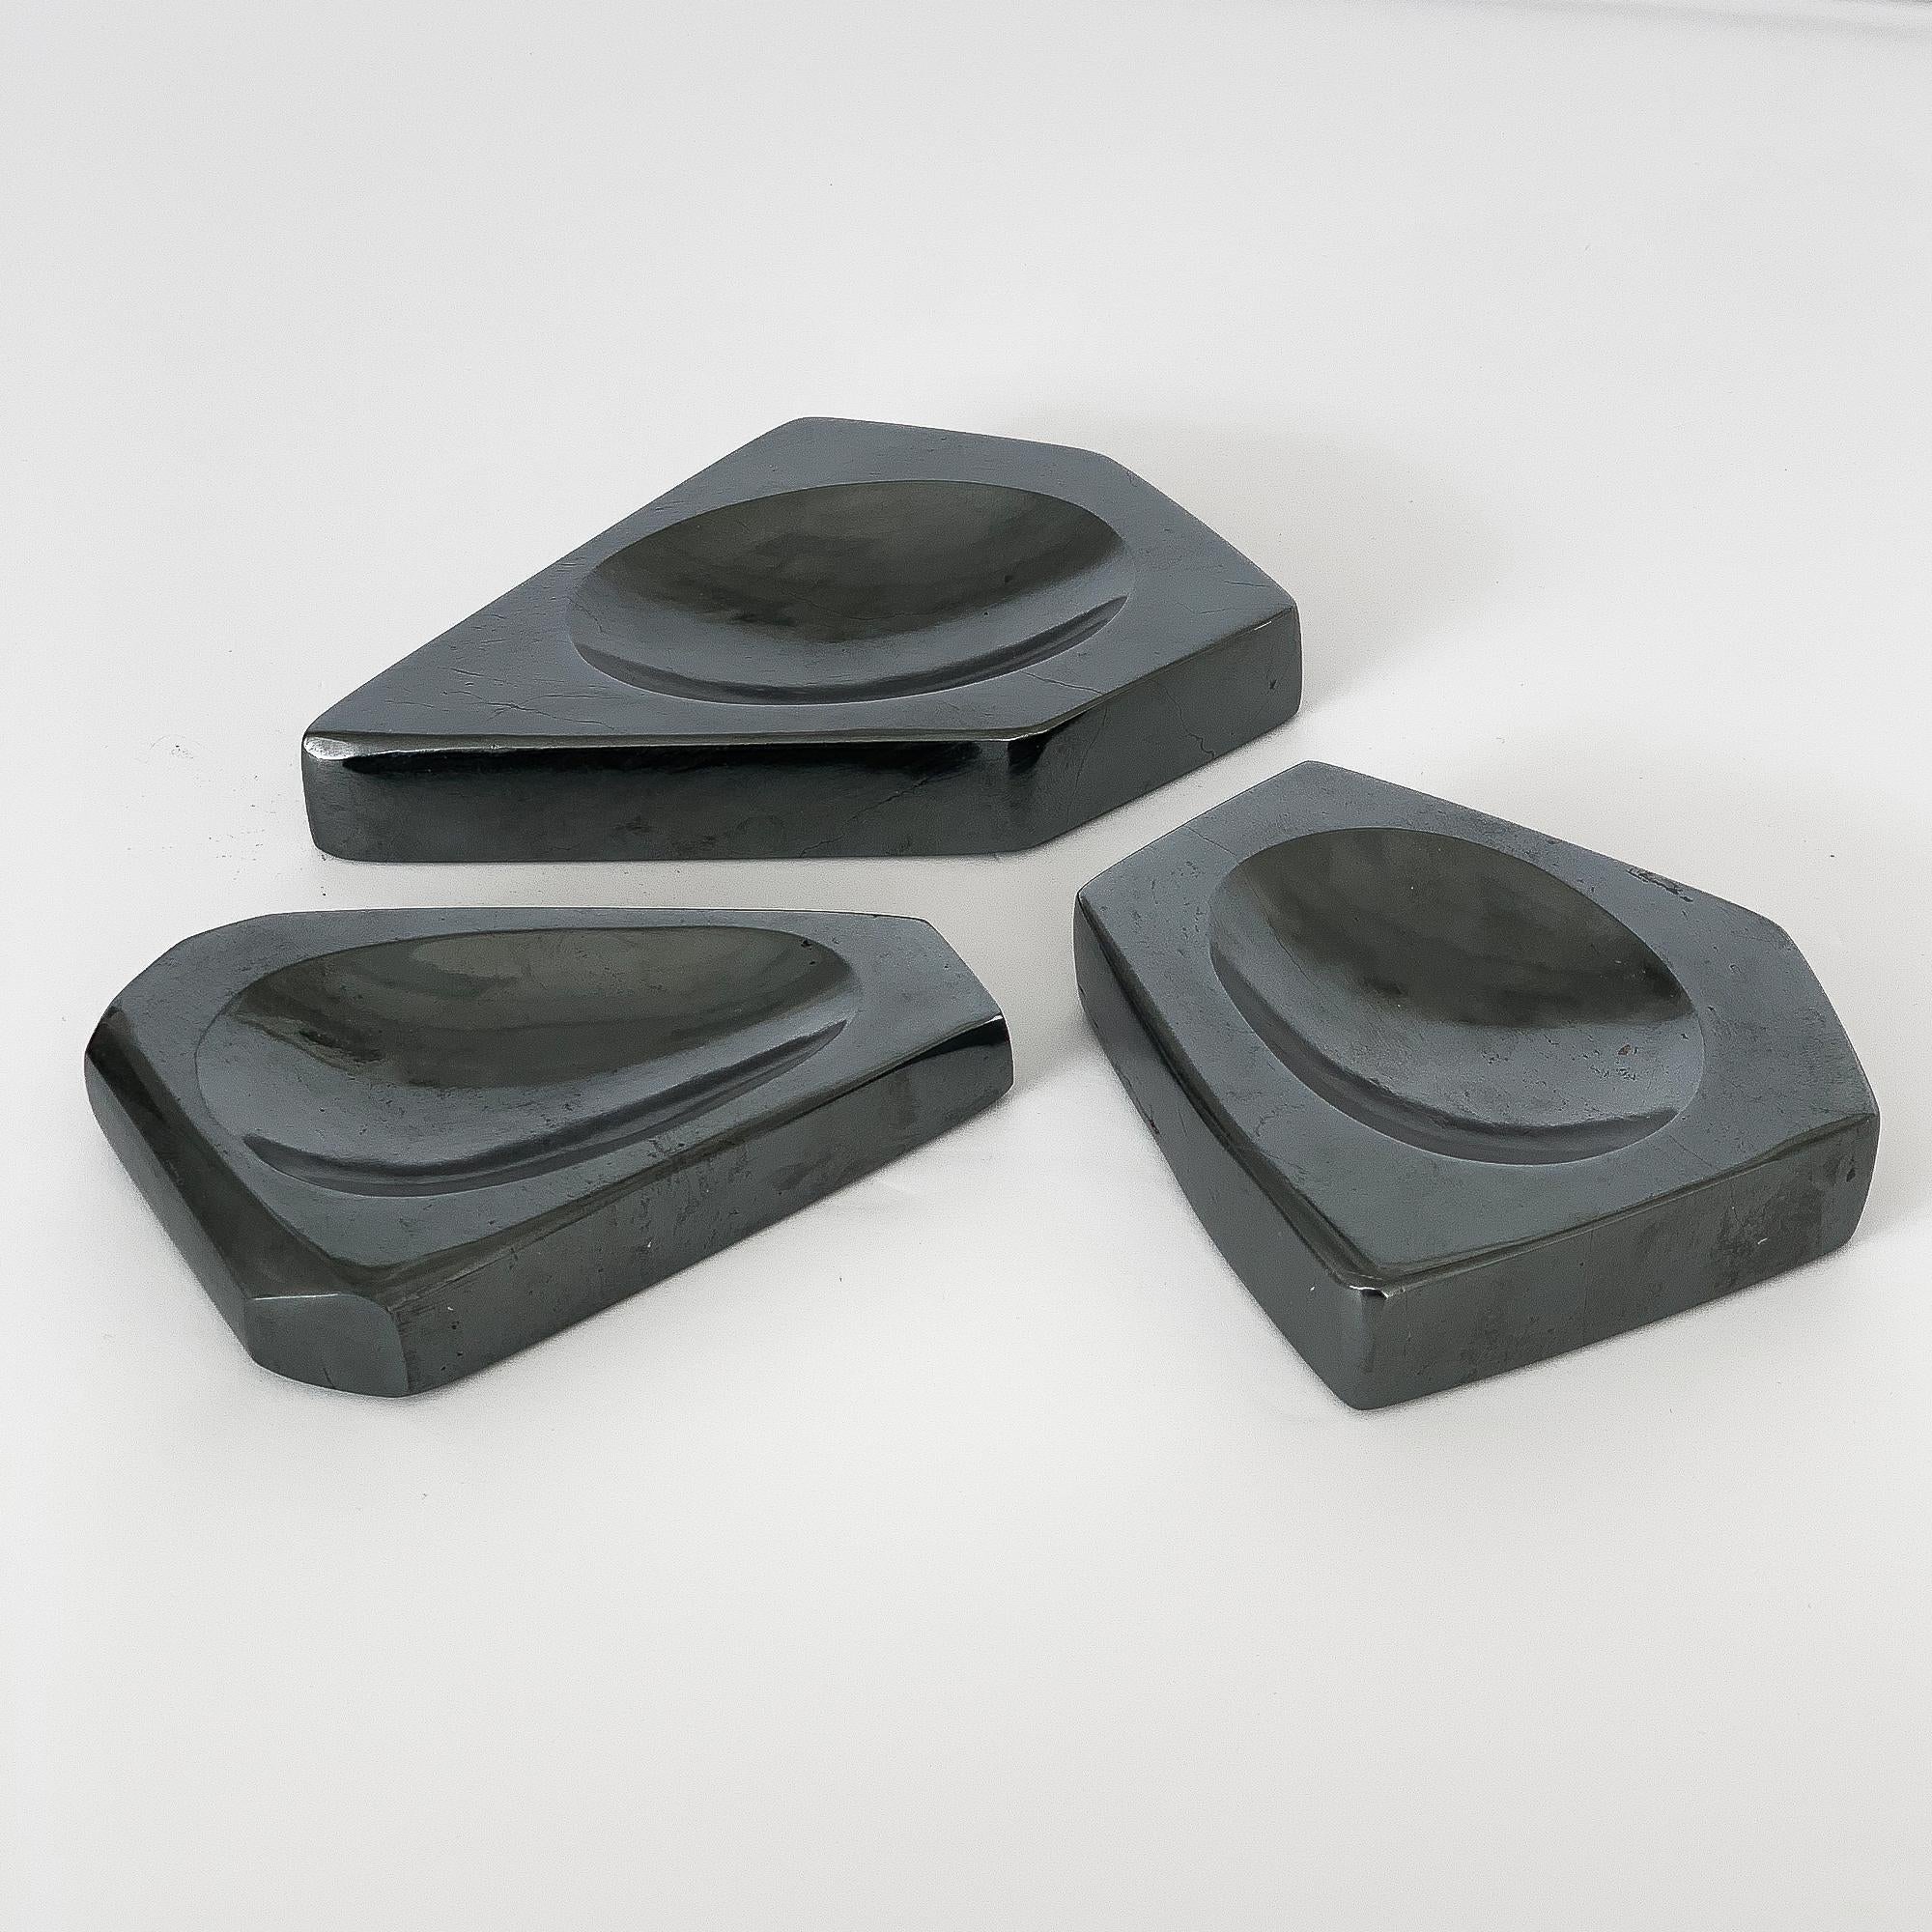 Set of three carved hematite stone vide poches or dishes. Faceted carved solid hematite stone with elliptical shallow 0.5